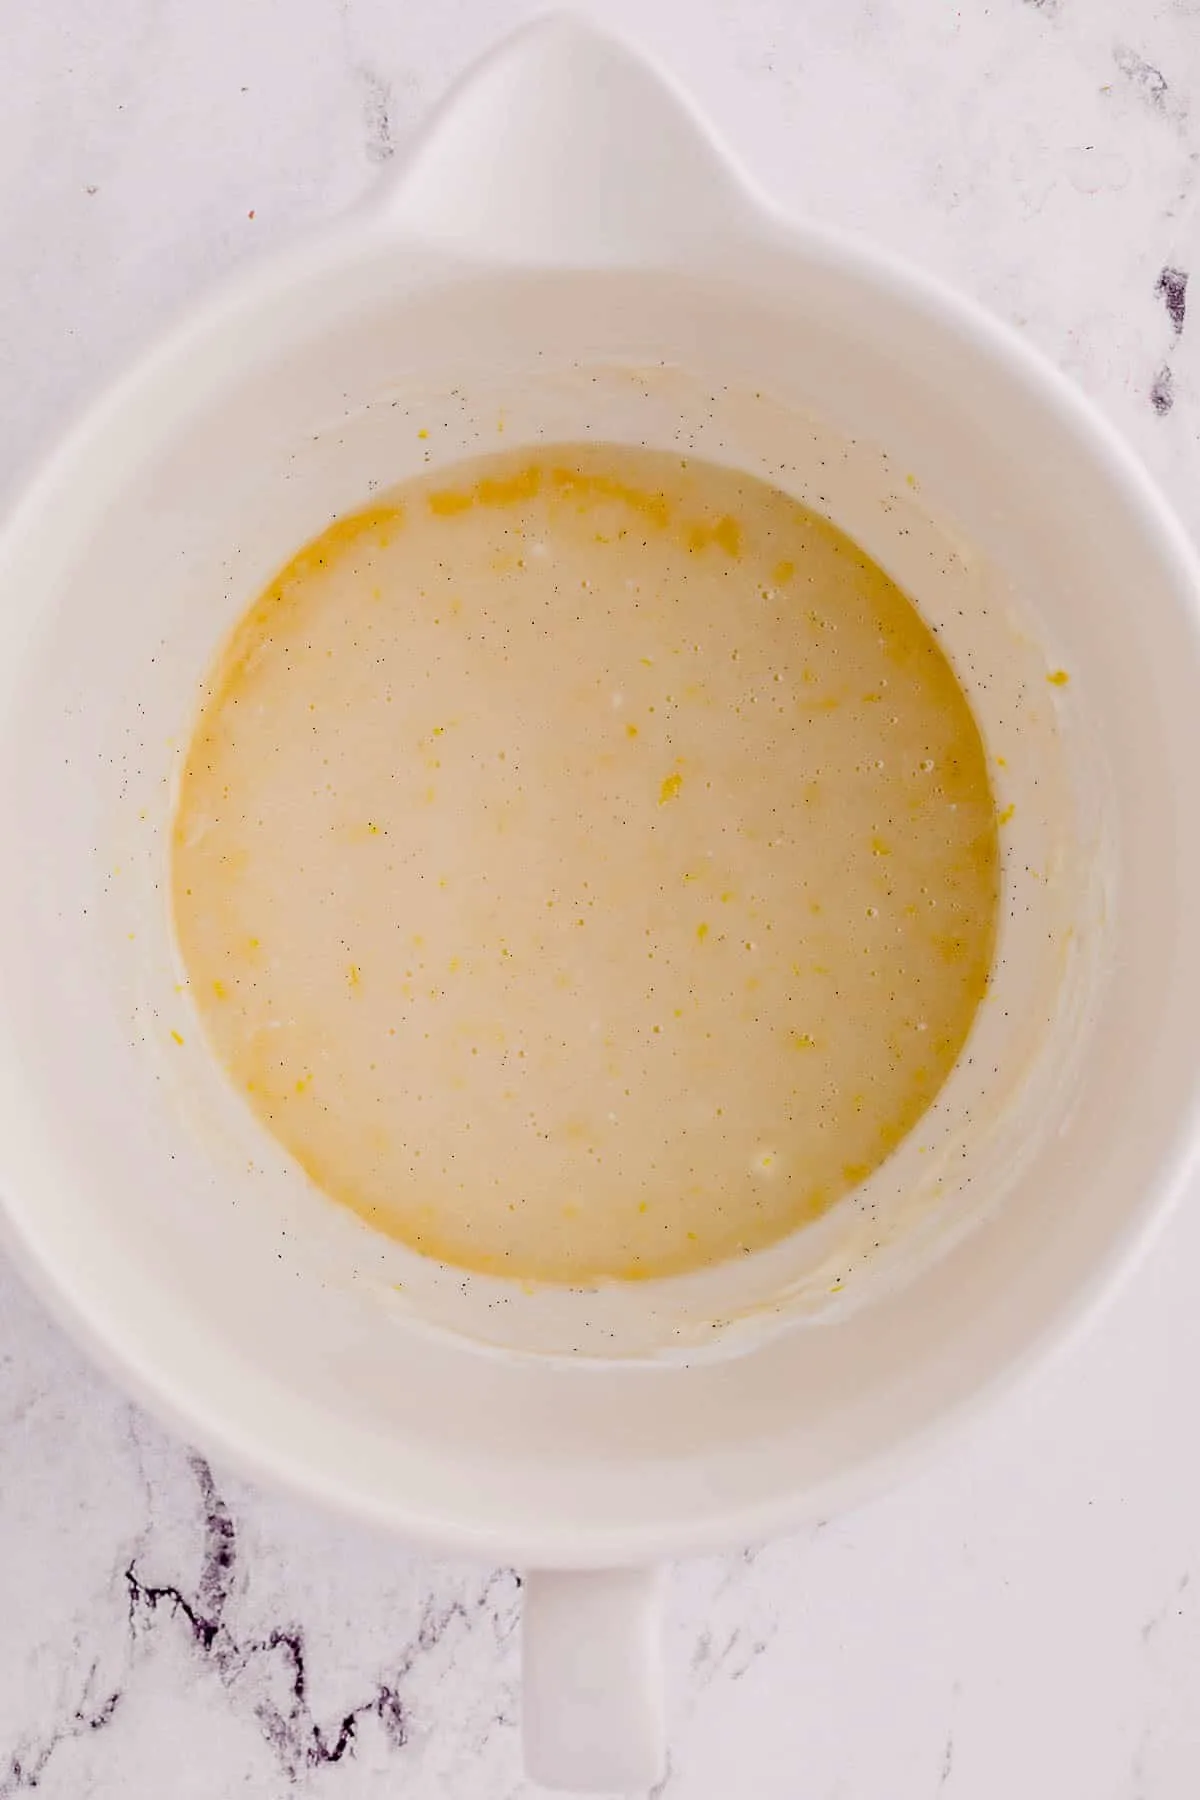 lemon zest, sugar, oil and egg mixture in a bowl